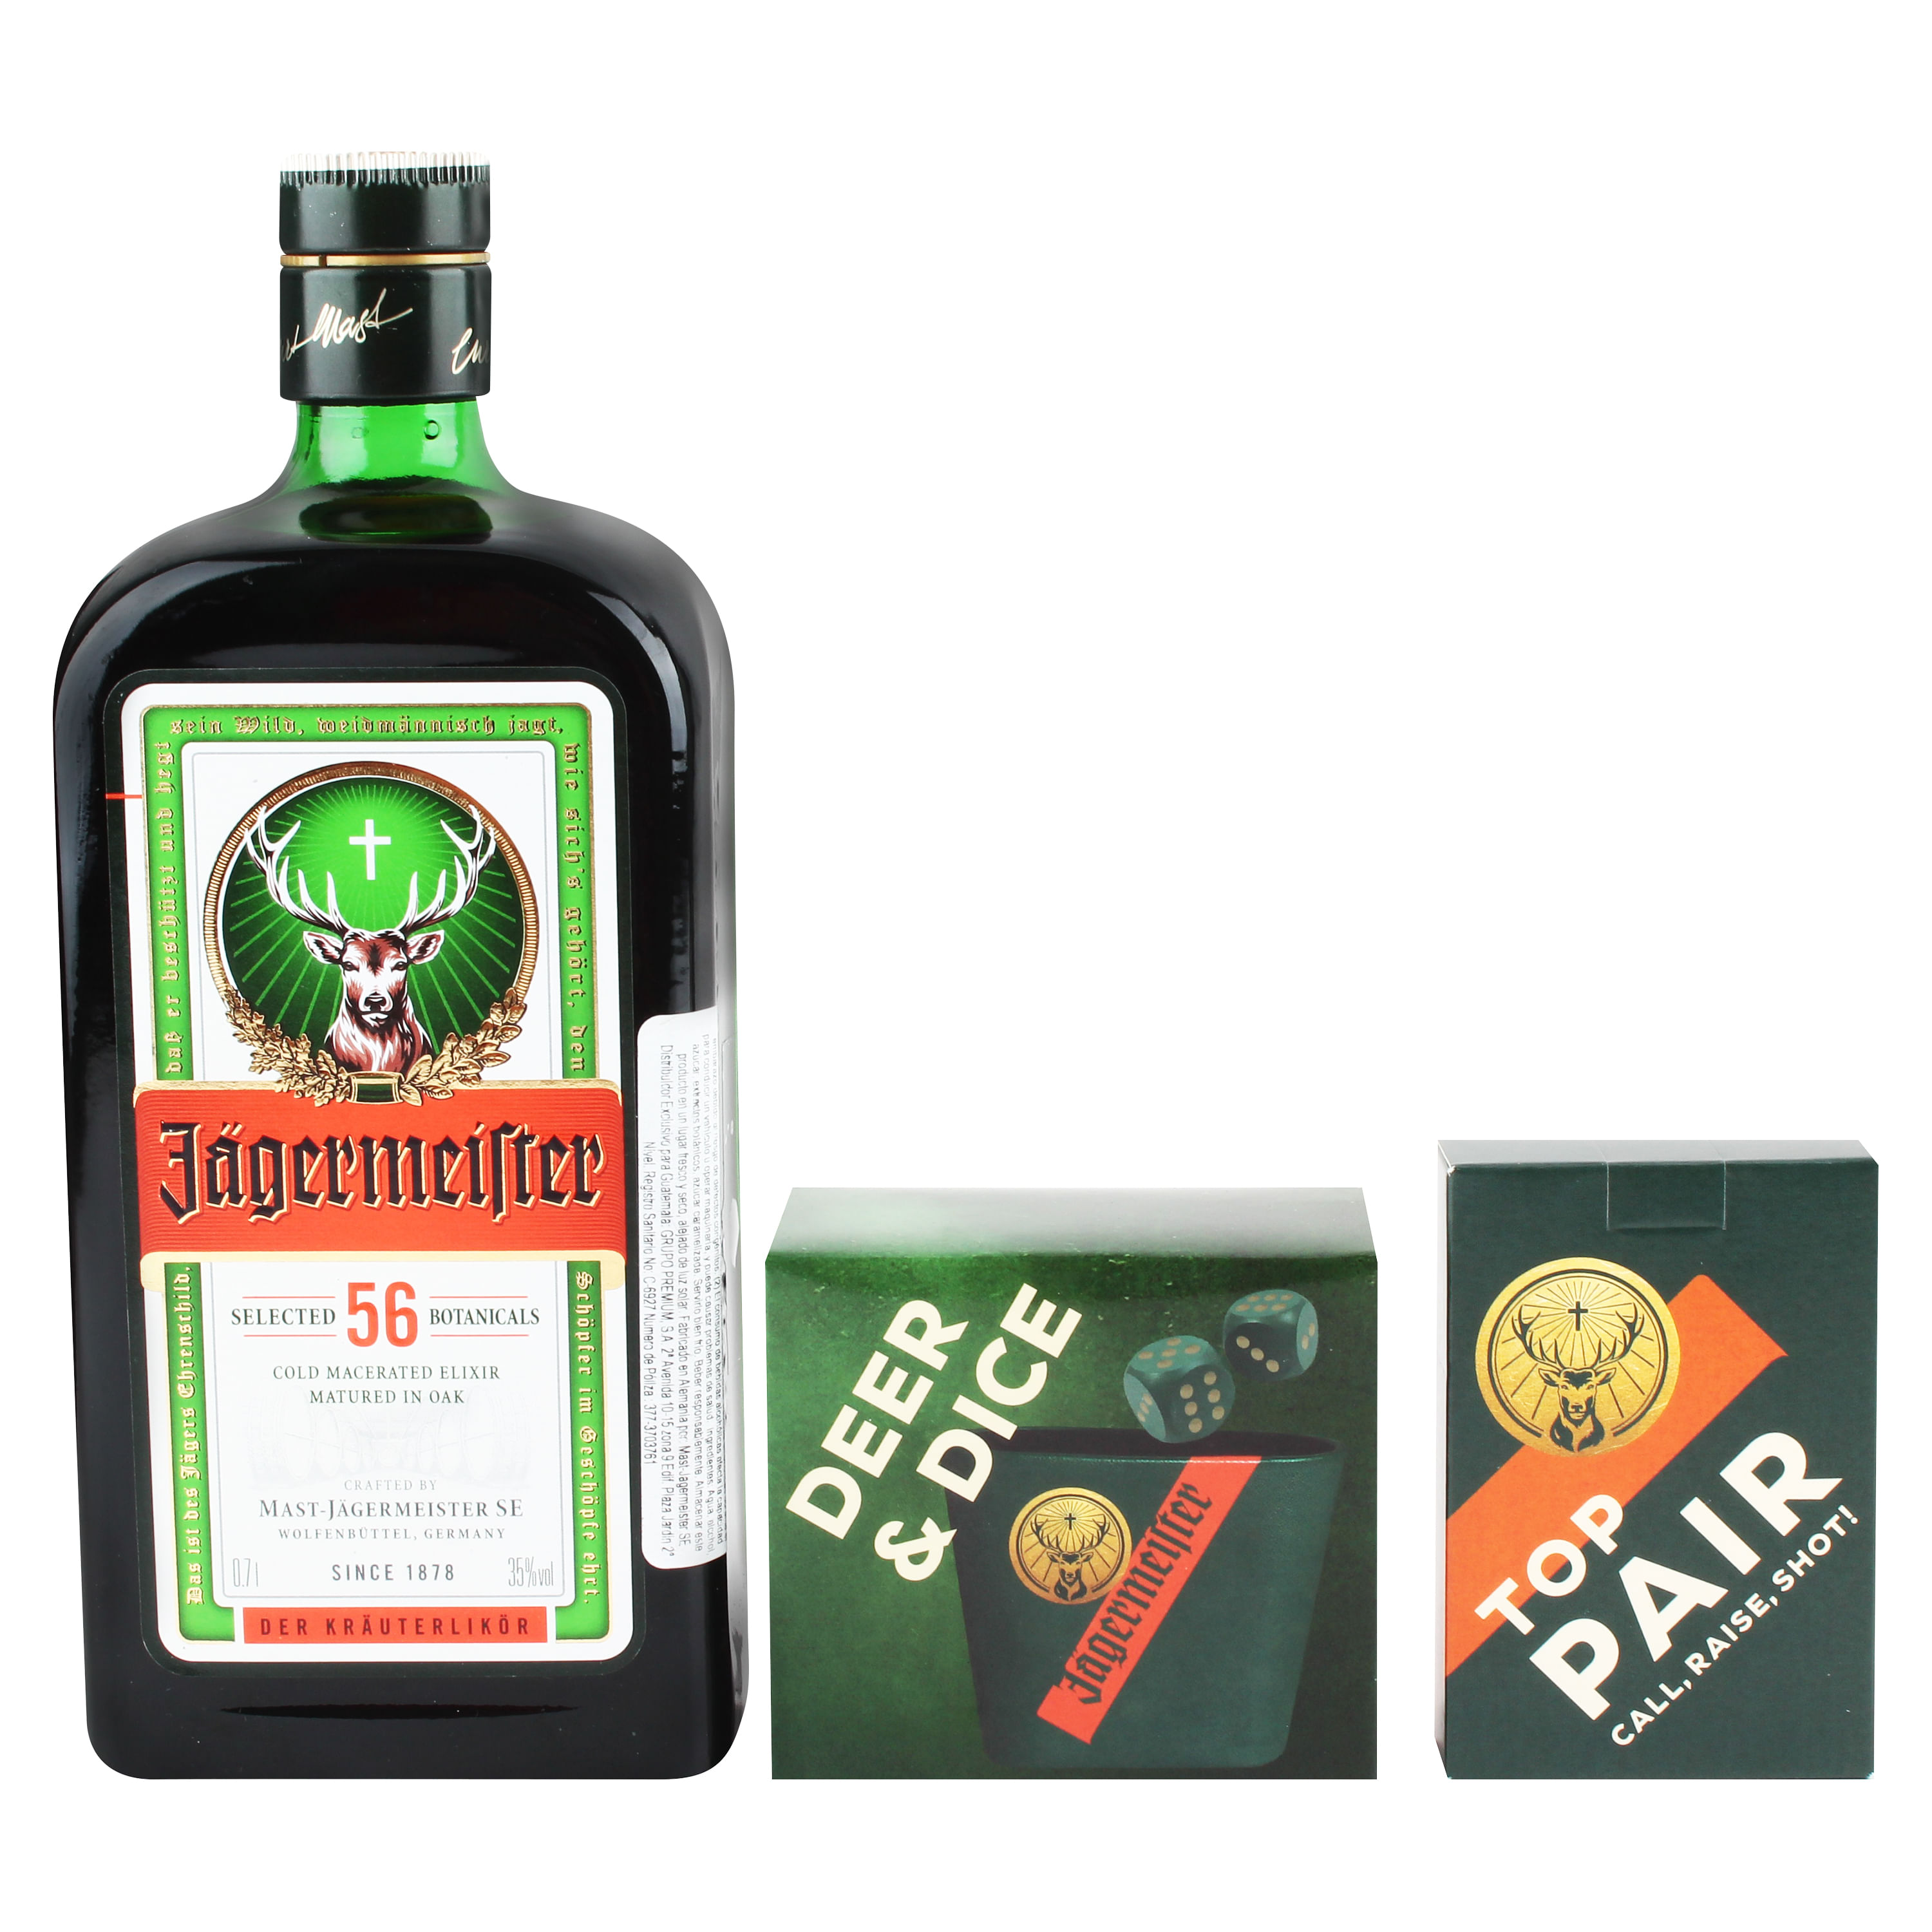 Comprar Licor Jagermeister 2 Botellas + 6 Chupitos Online - Envío Gratis